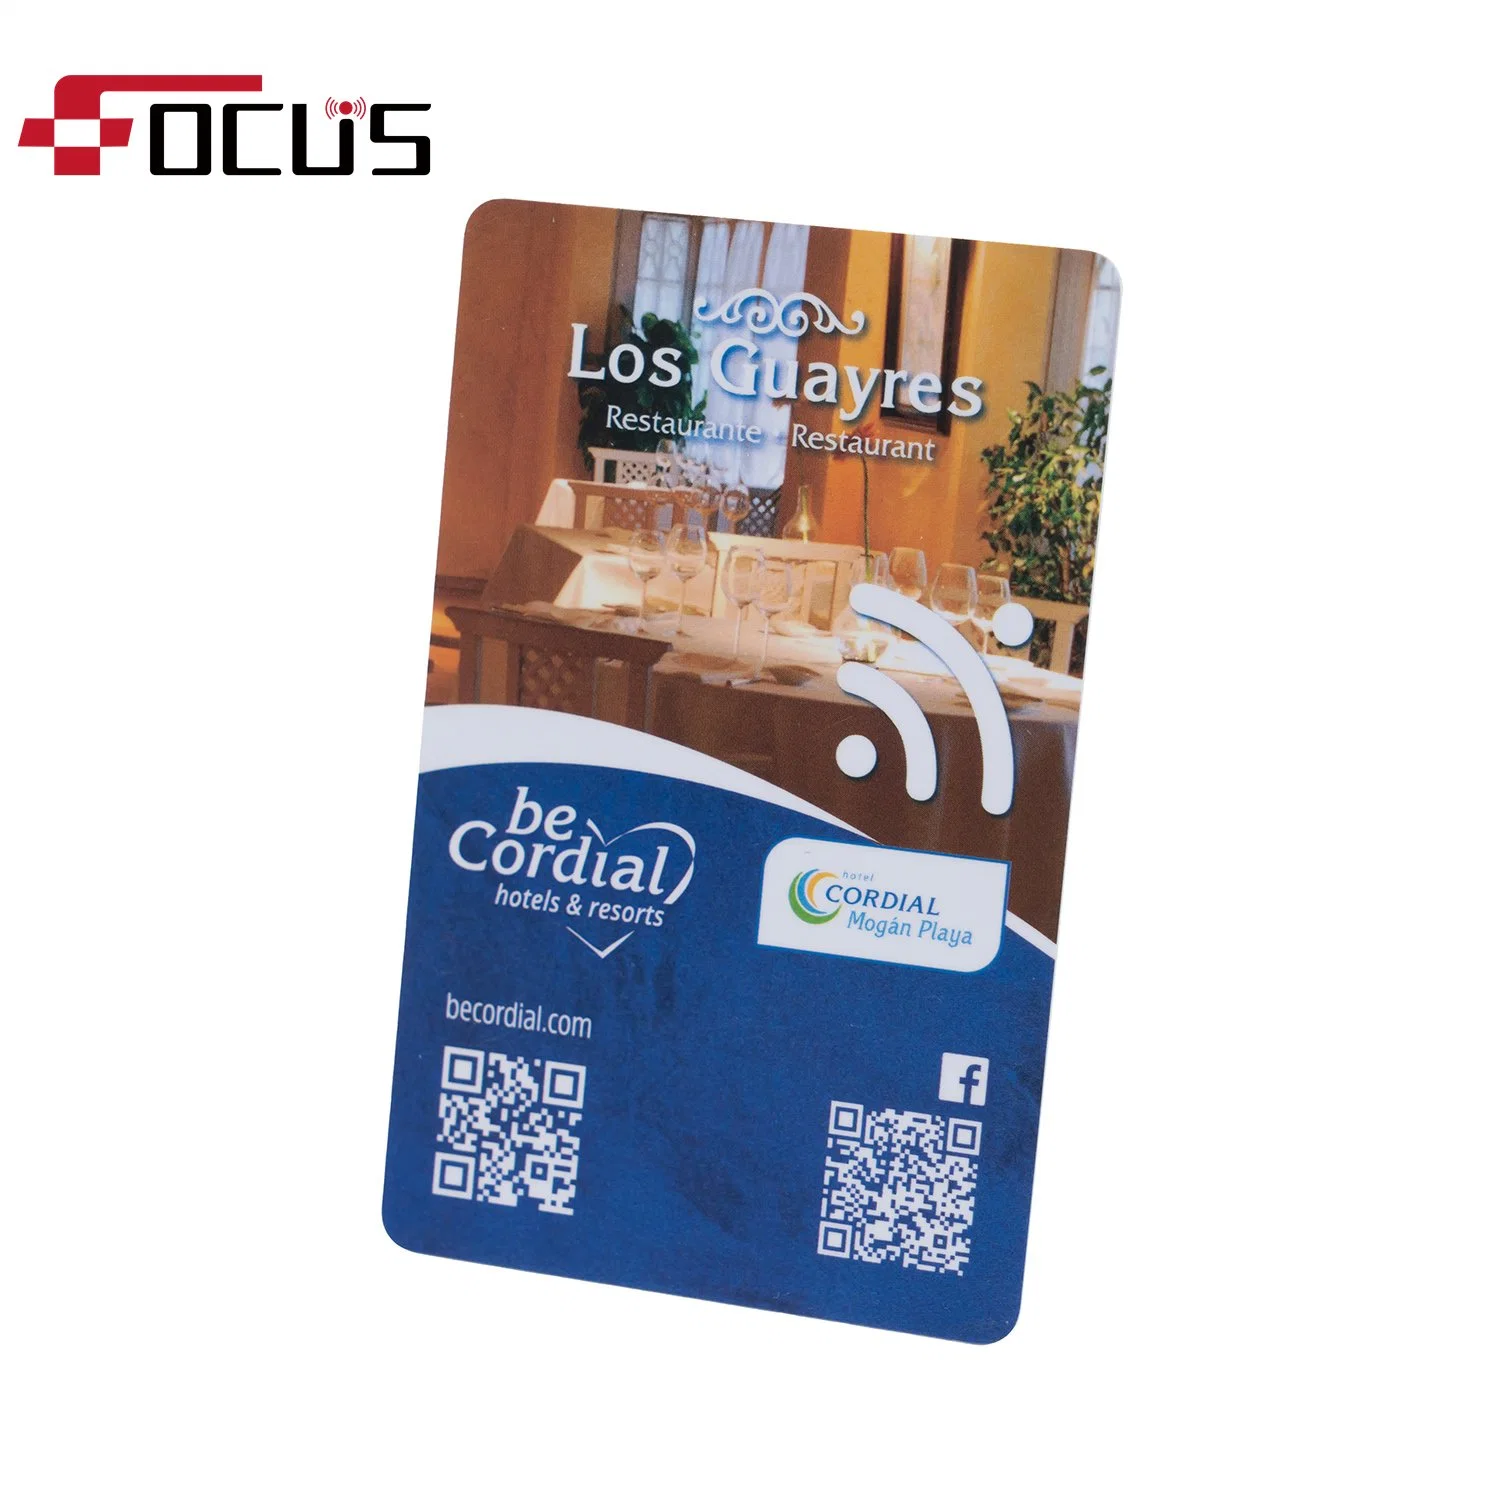 Proximity ISO F08 Business Key Card RFID Smart Card